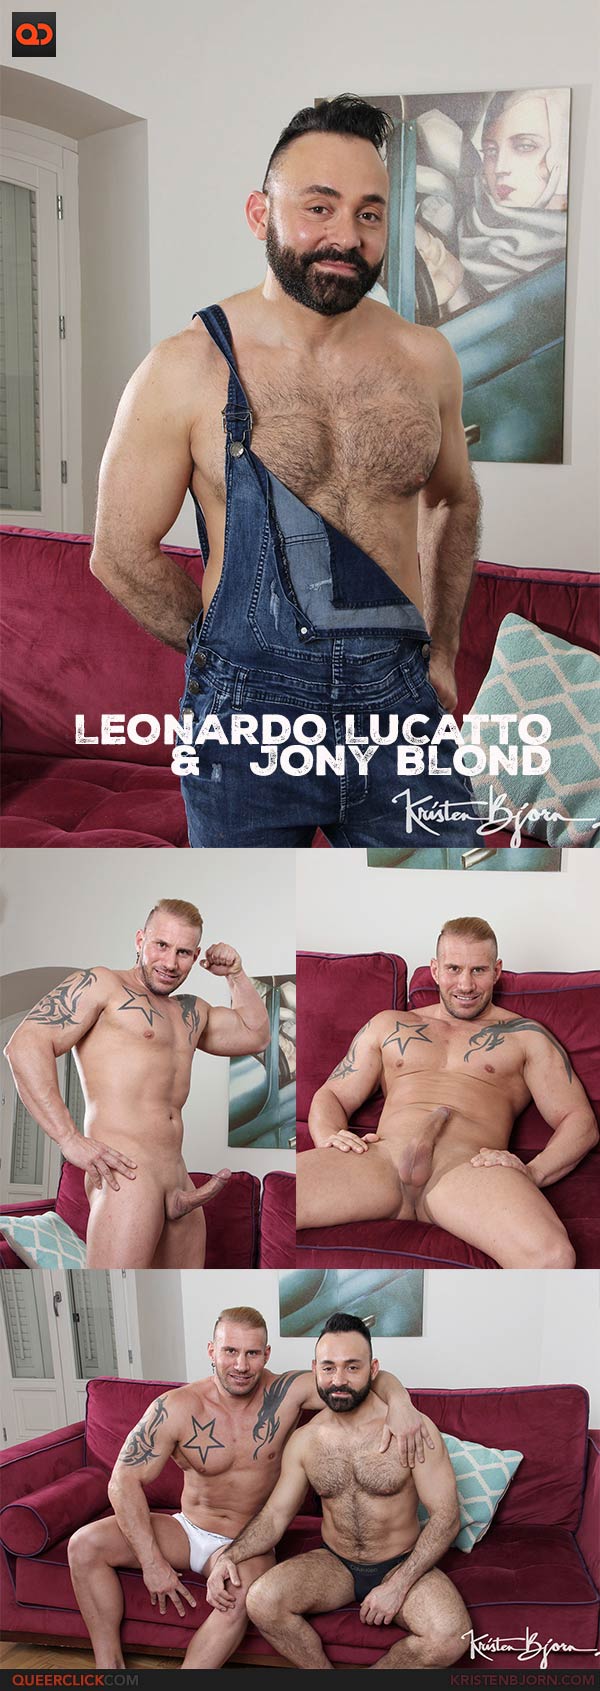 Kristen Bjorn: Jony Blond and Leonardo Lucatto